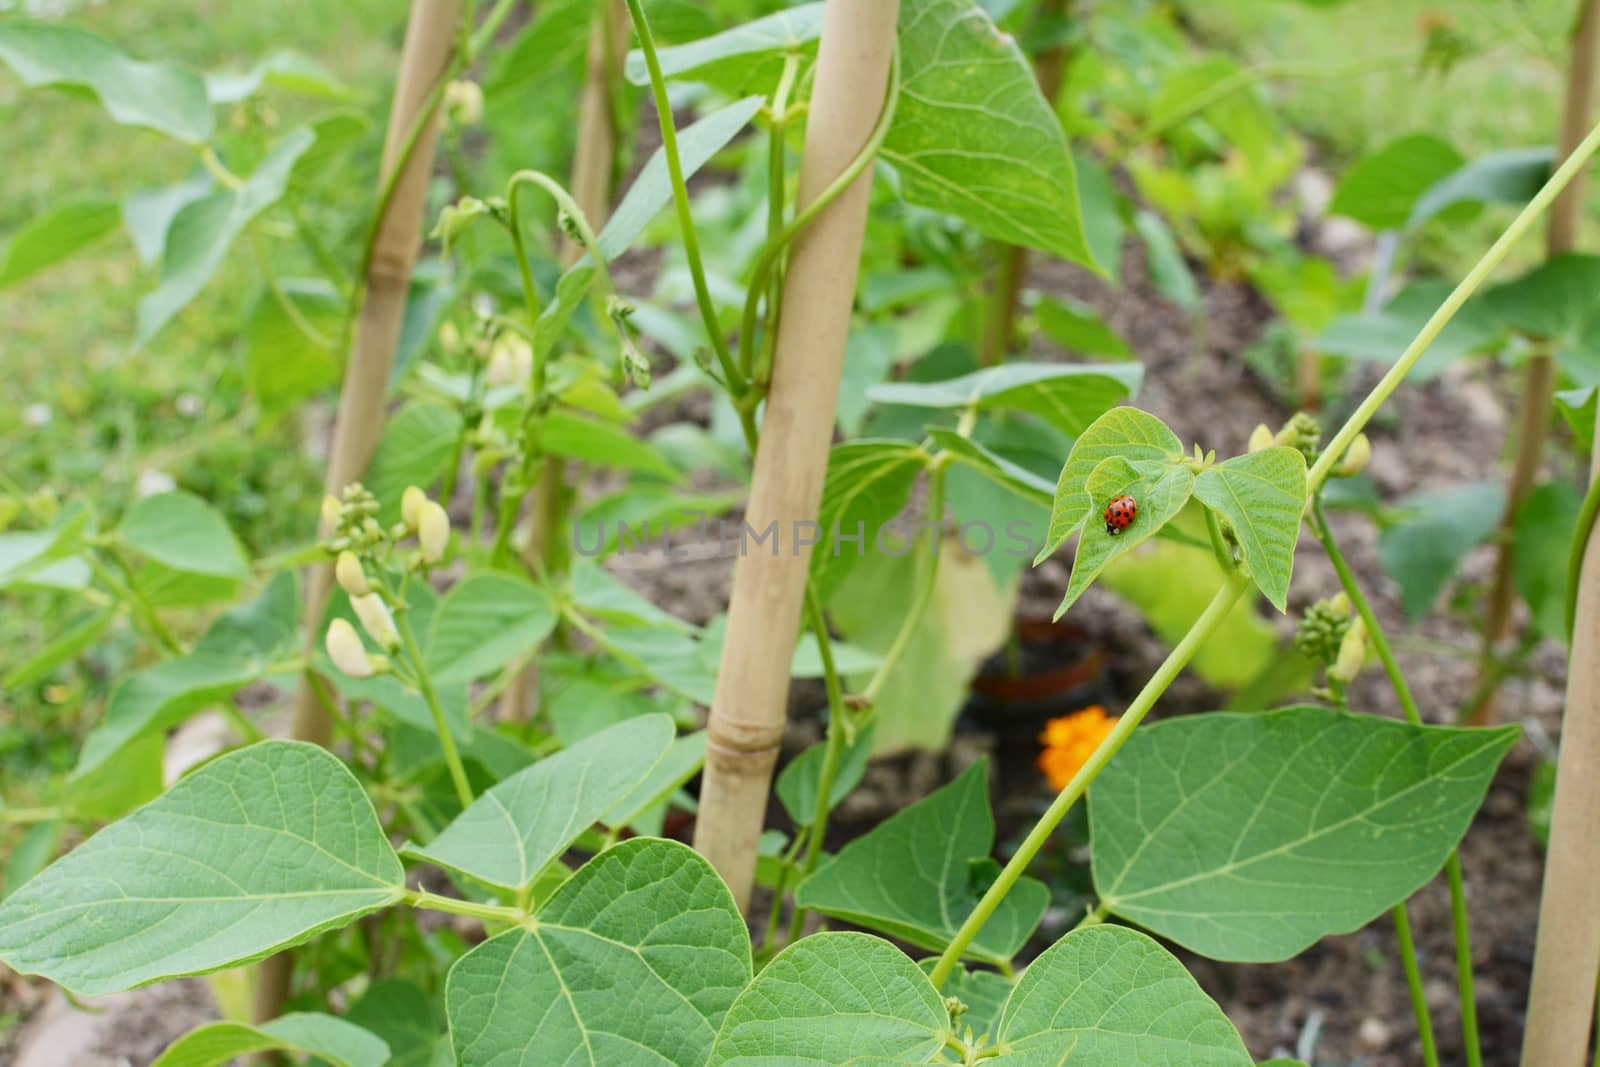 Harlequin ladybird on a runner bean vine, growing up a wigwam by sarahdoow